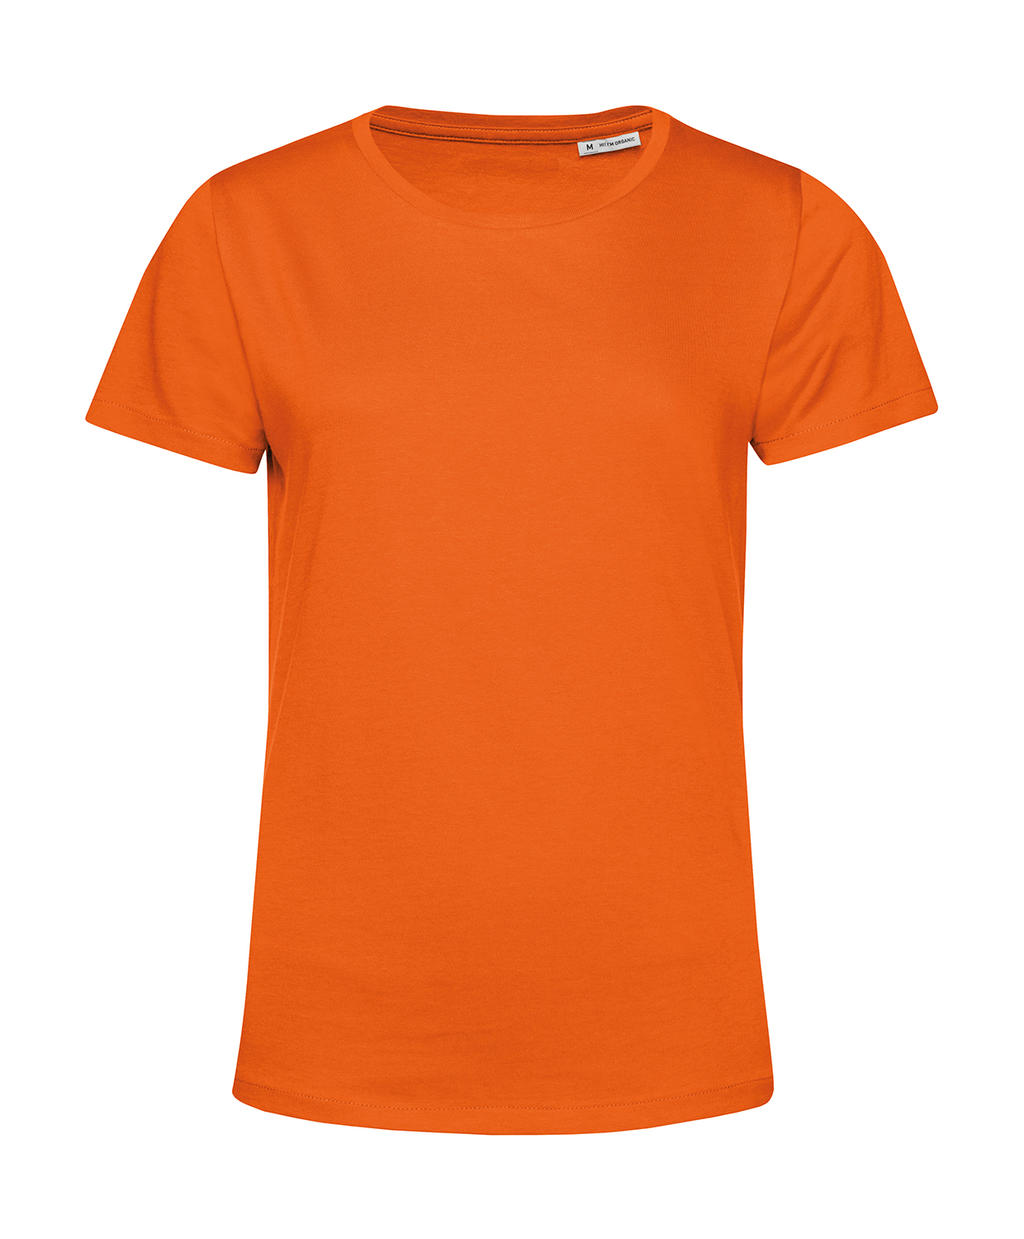 Tričko dámské BC Organic Inspire E150 - oranžové, L